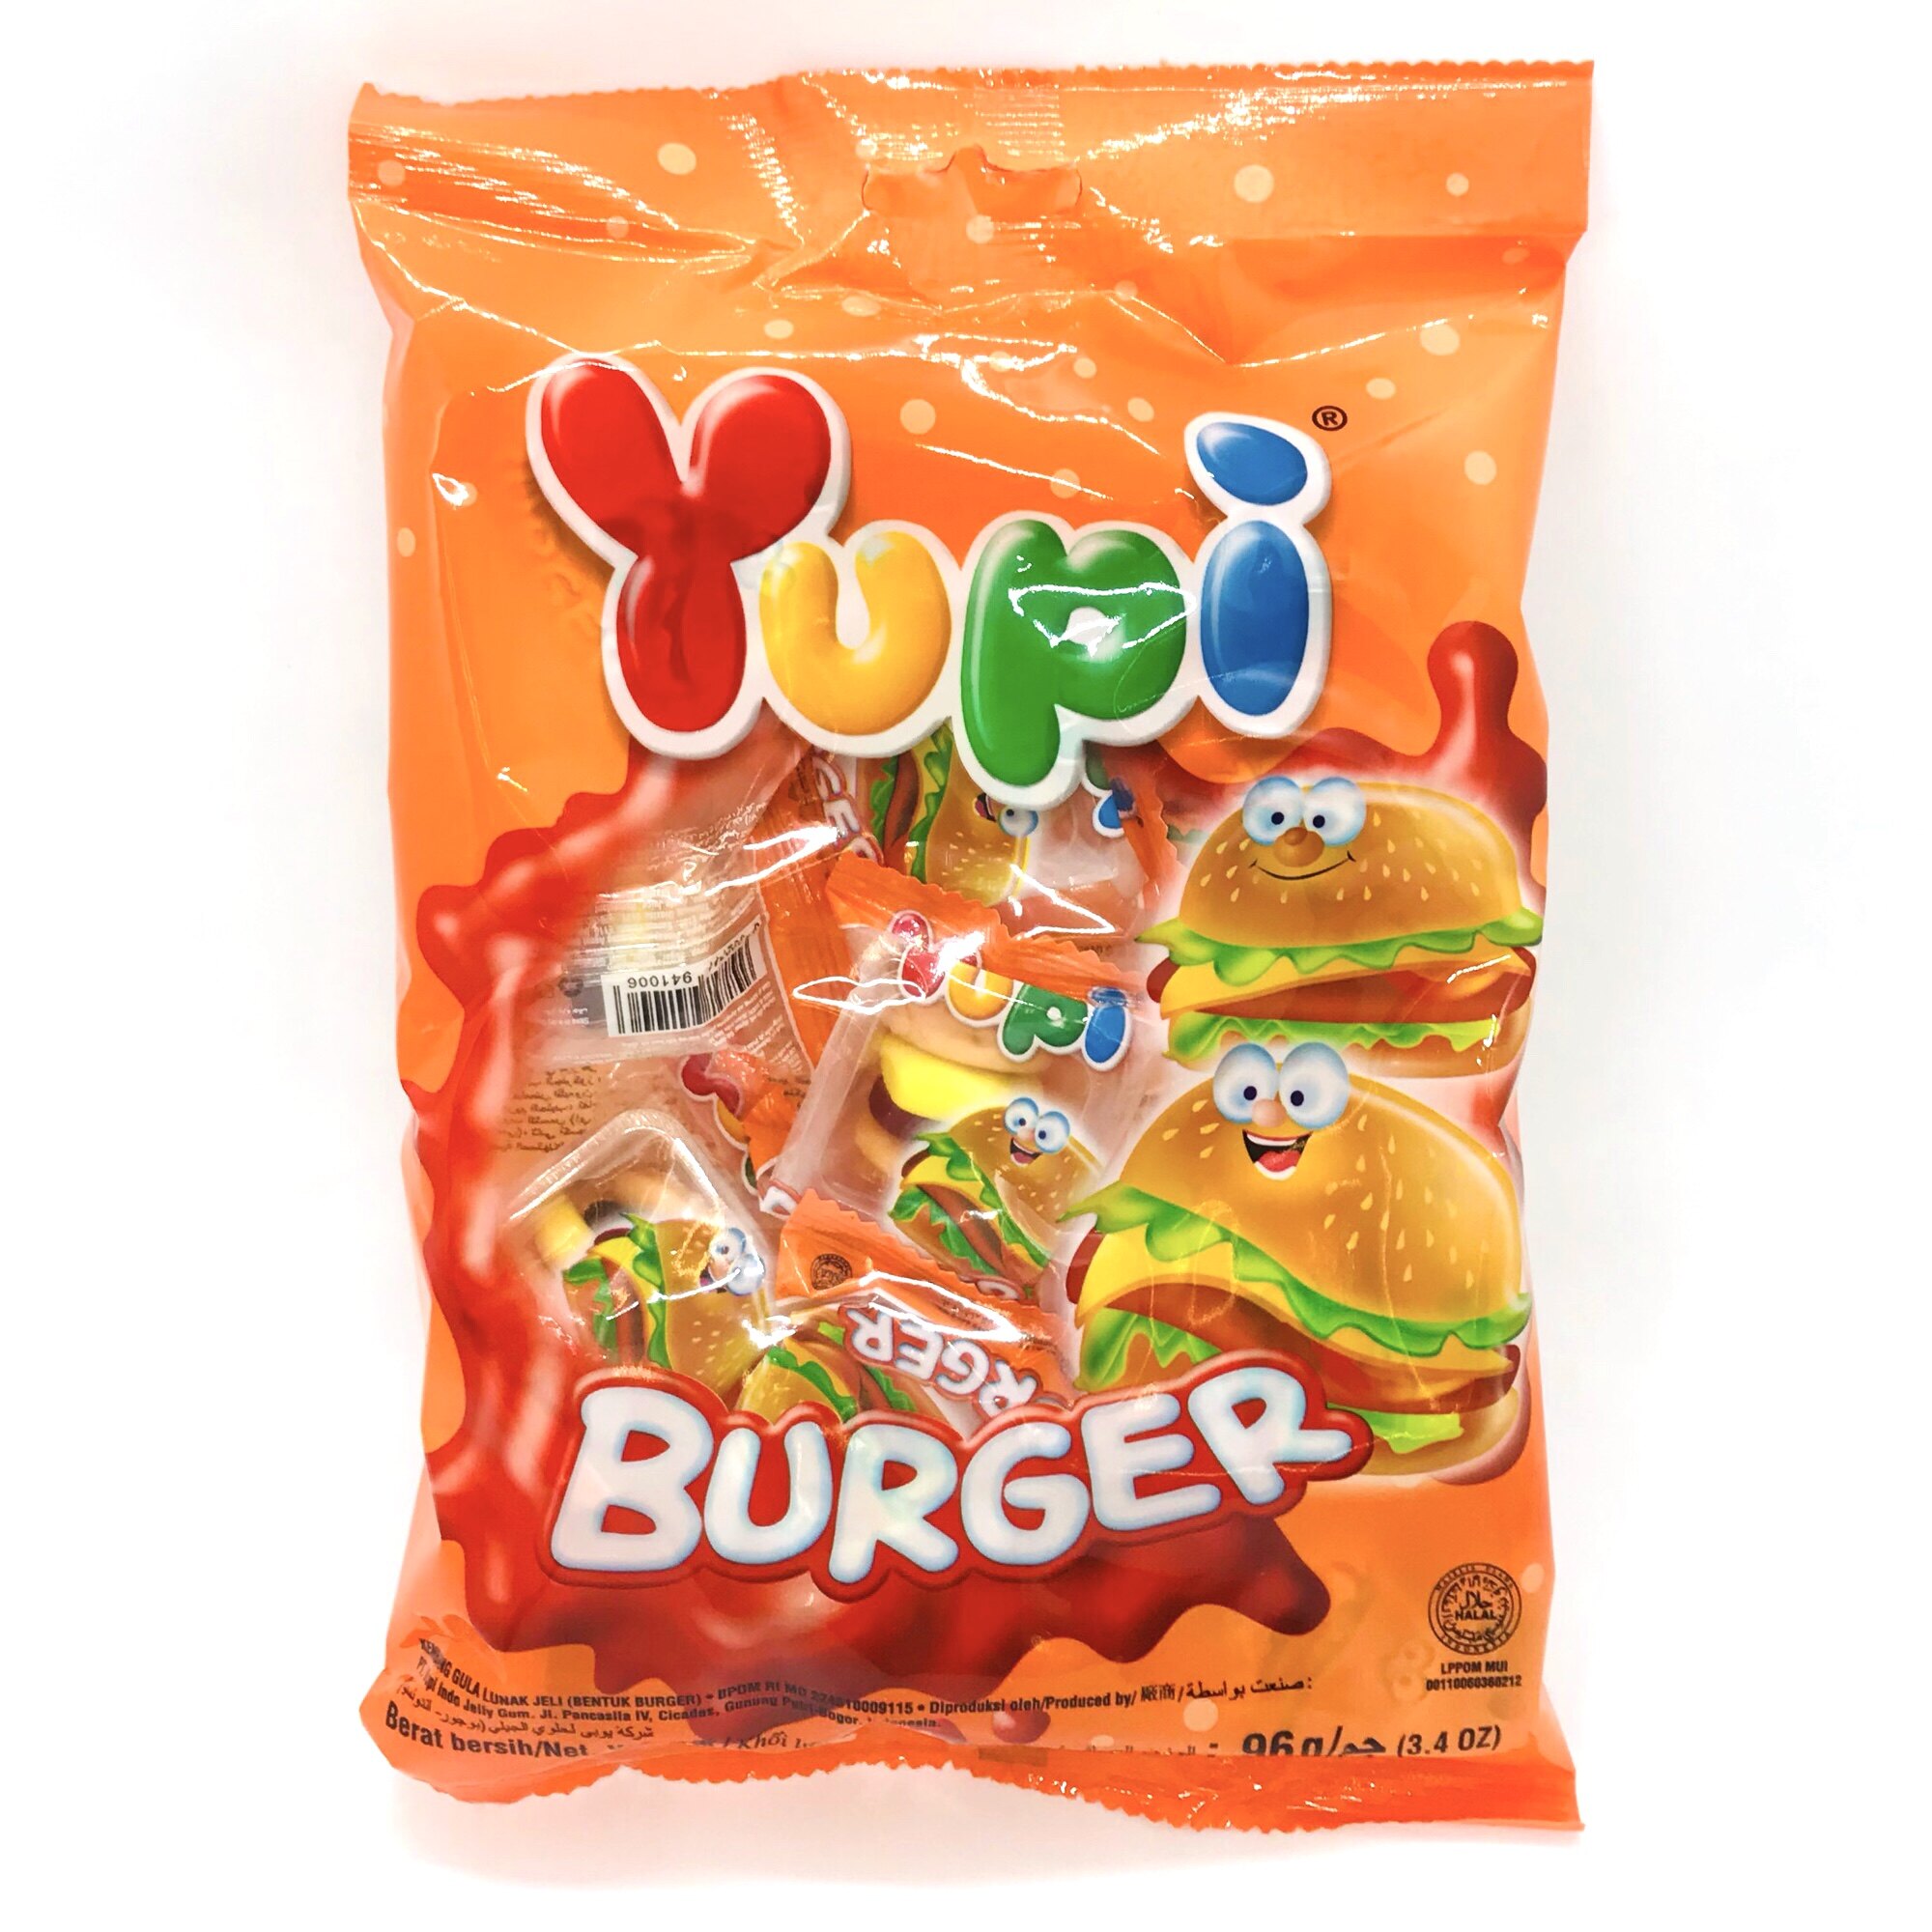 Malaysian childhood snacks - Yupi burgers